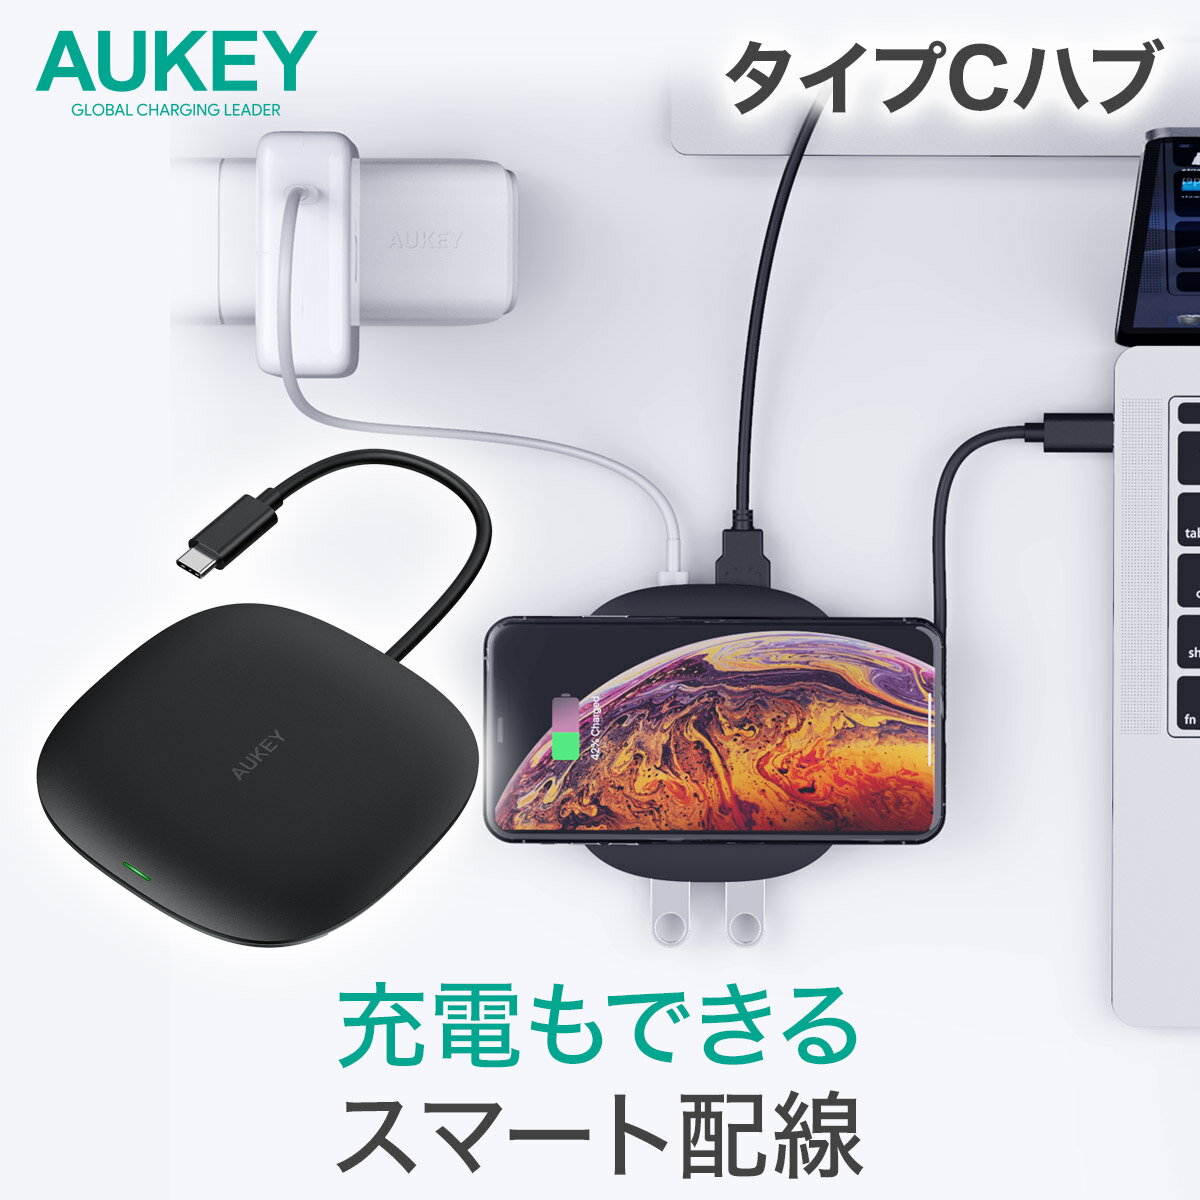 AUKEY（オーキー） CB-C70-BK Unity Wireless ブラック USBハブ USB3.0 type-c ノートパソコン Macbook HDMI 4K出力対応 PD入力対応 データ転送 5Gbps ワイヤレス充電 最大10W出力対応 110mm 2年保証